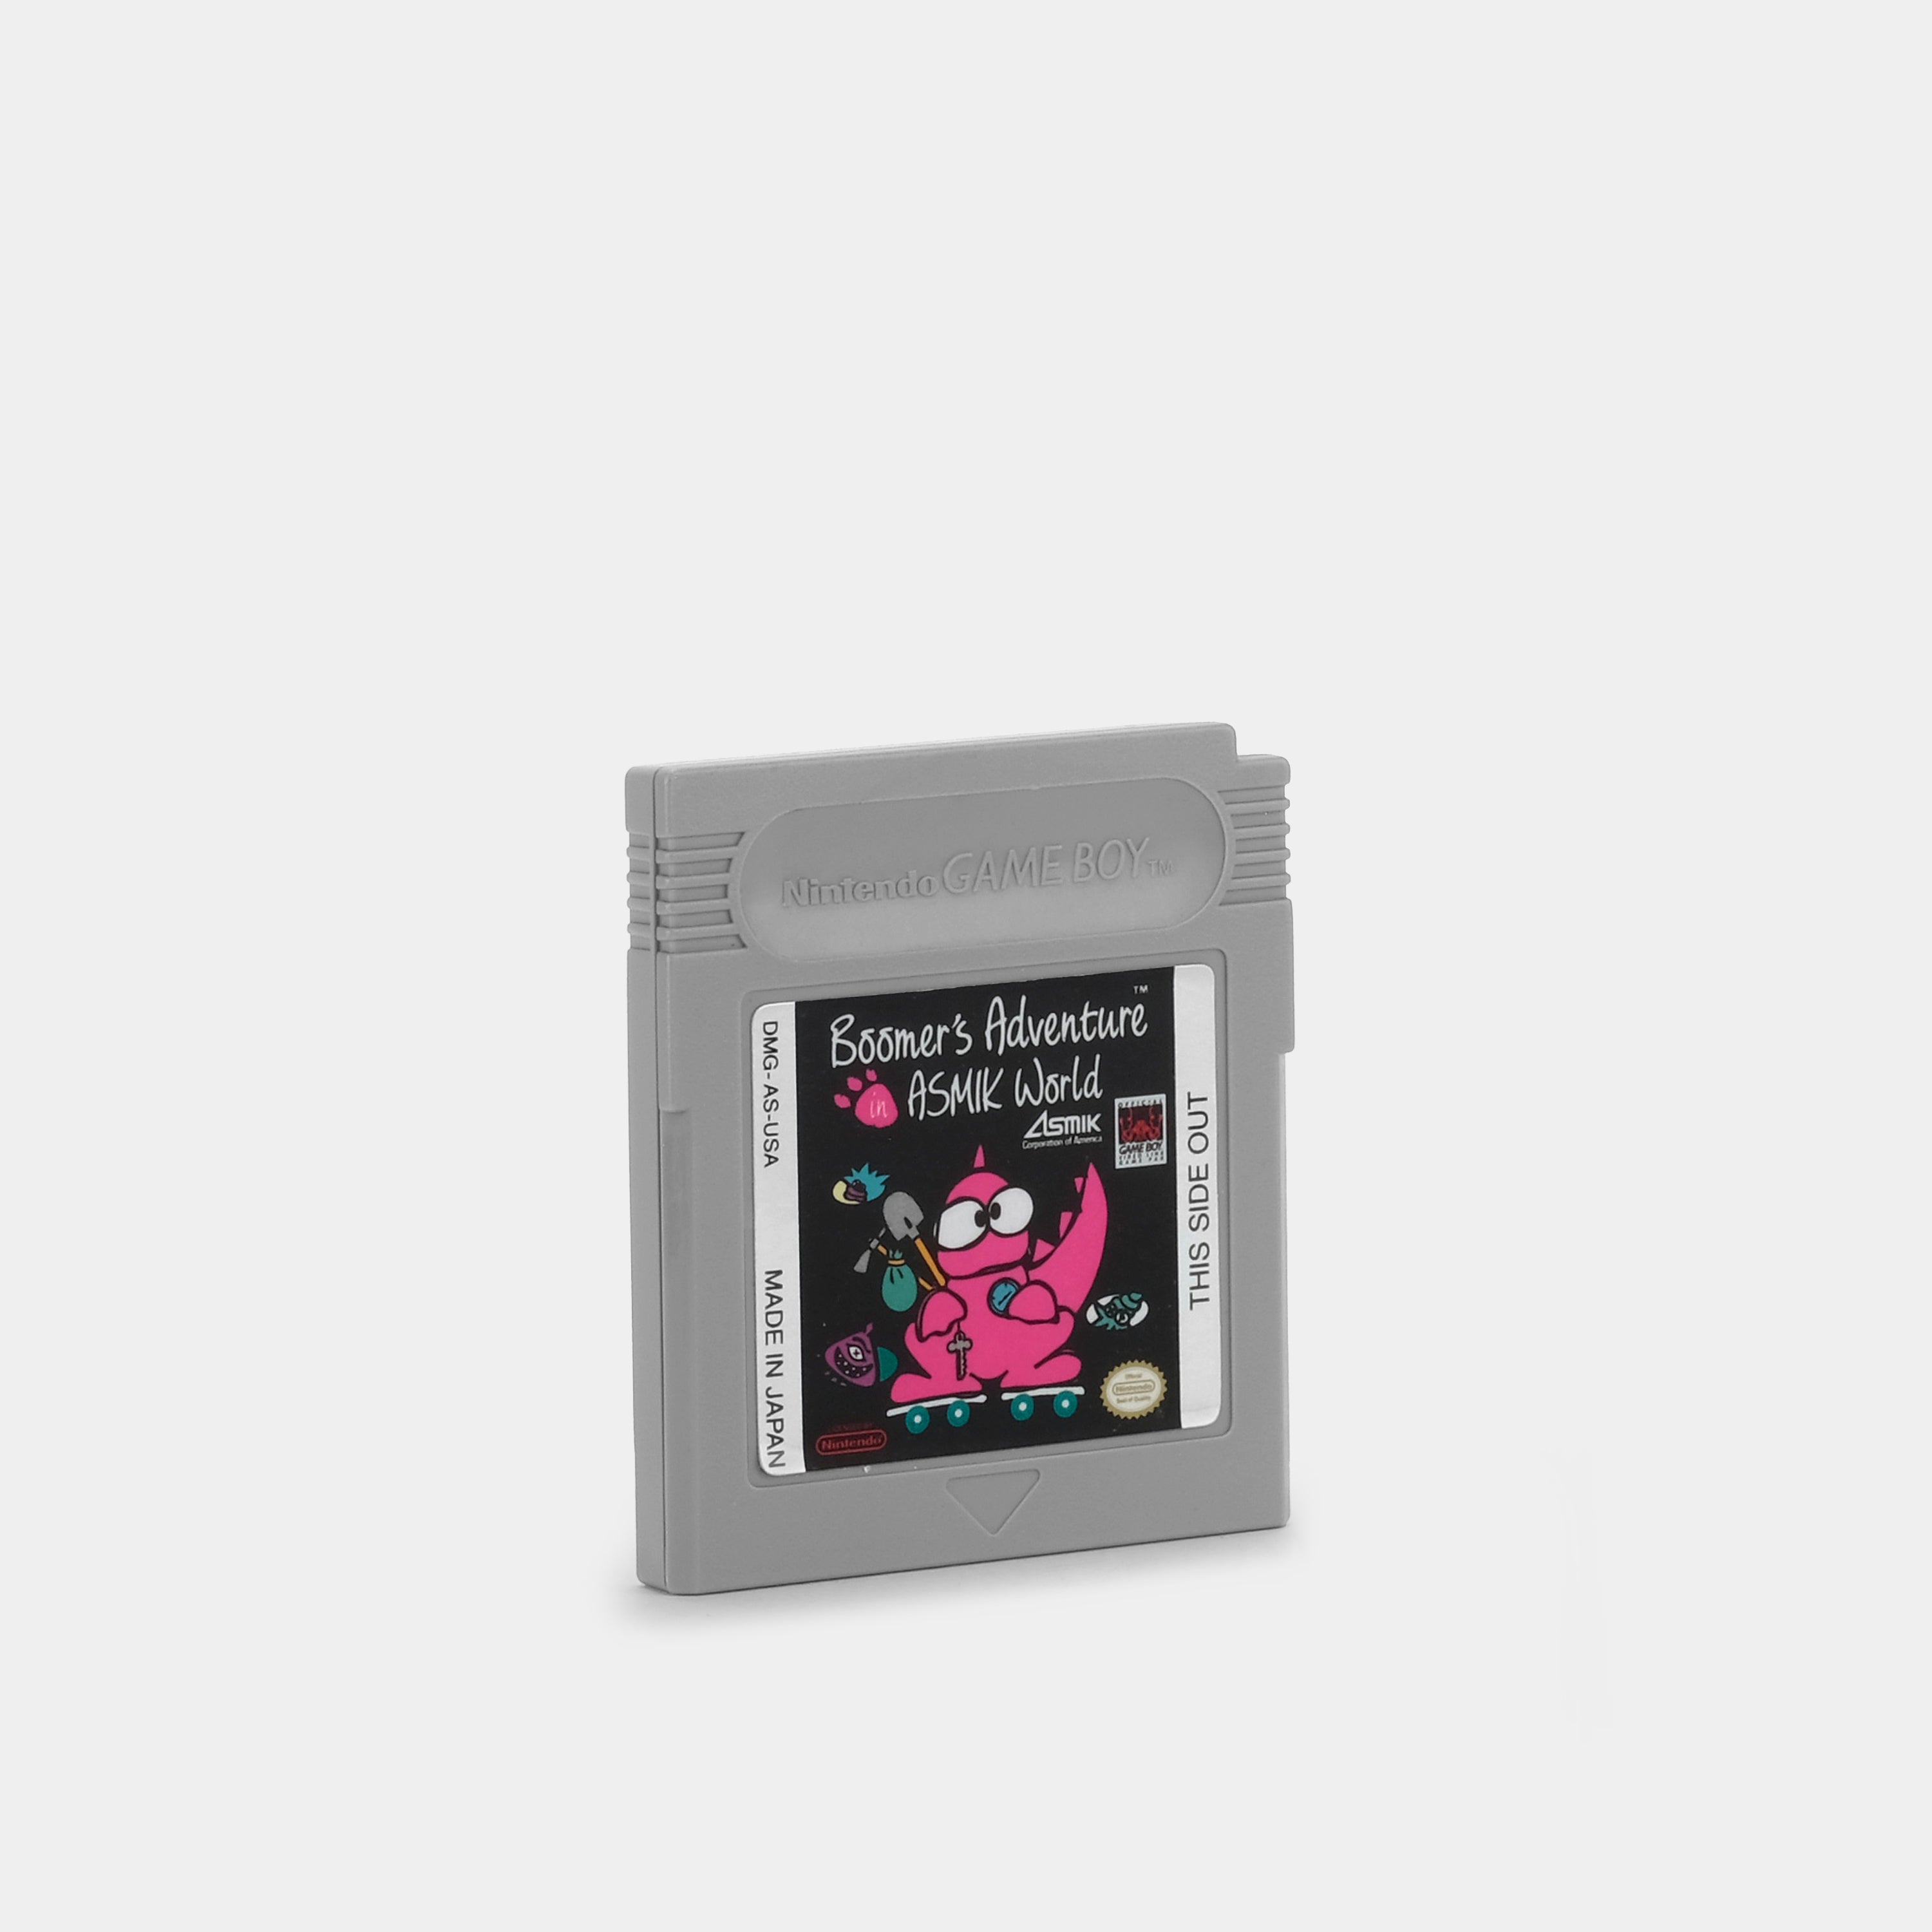 Boomer's Adventure in Asmik World Game Boy Game